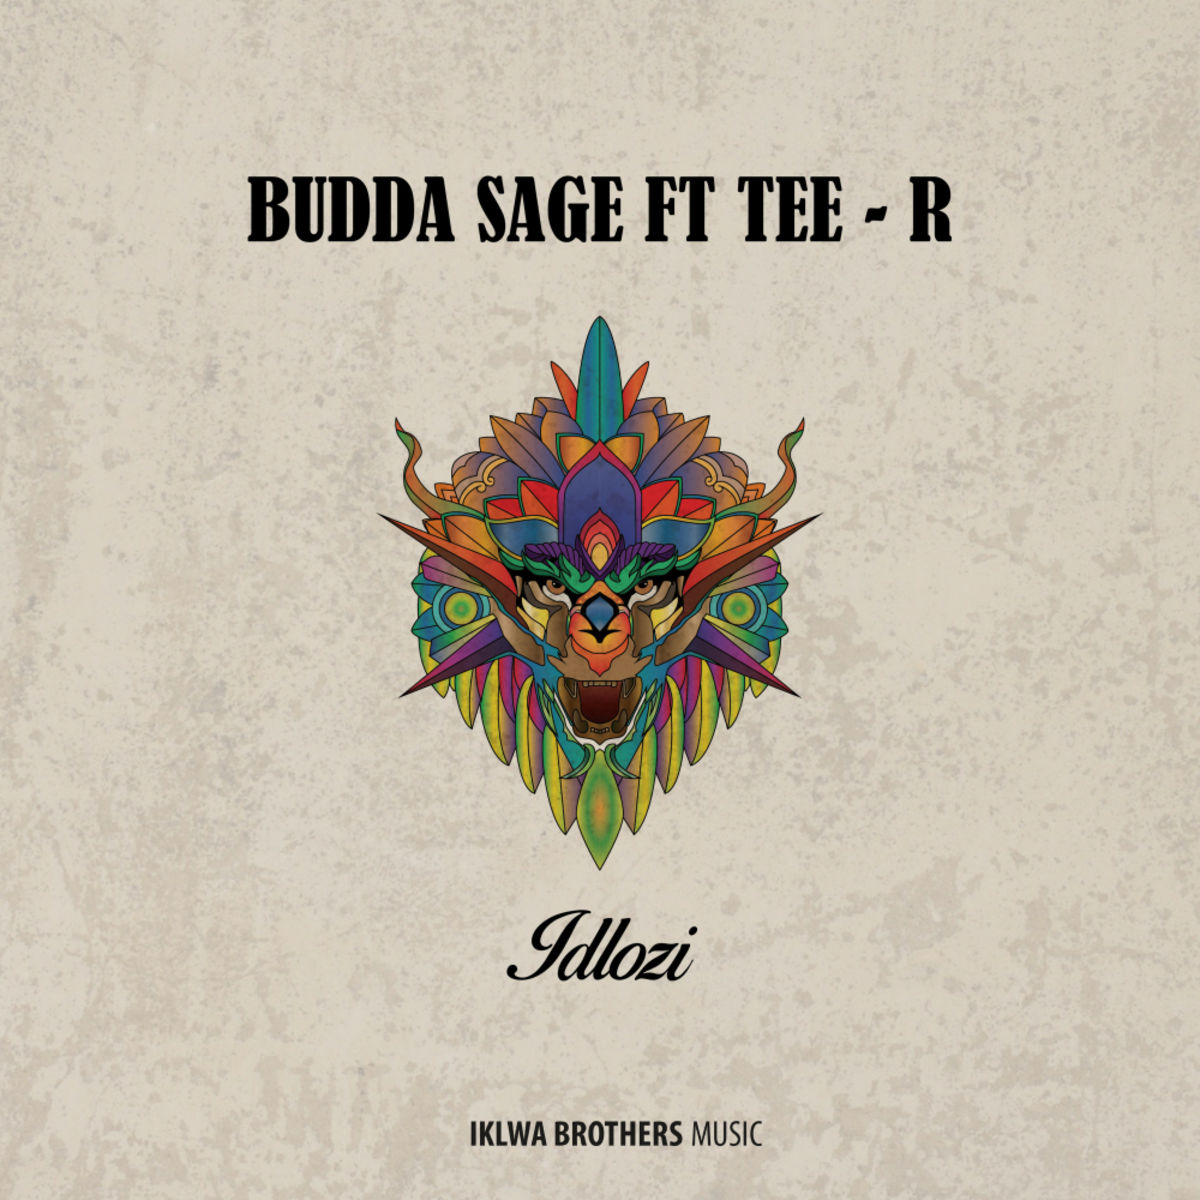 Budda Sage ft Tee - R - Idlozi / Iklwa Brothers Music